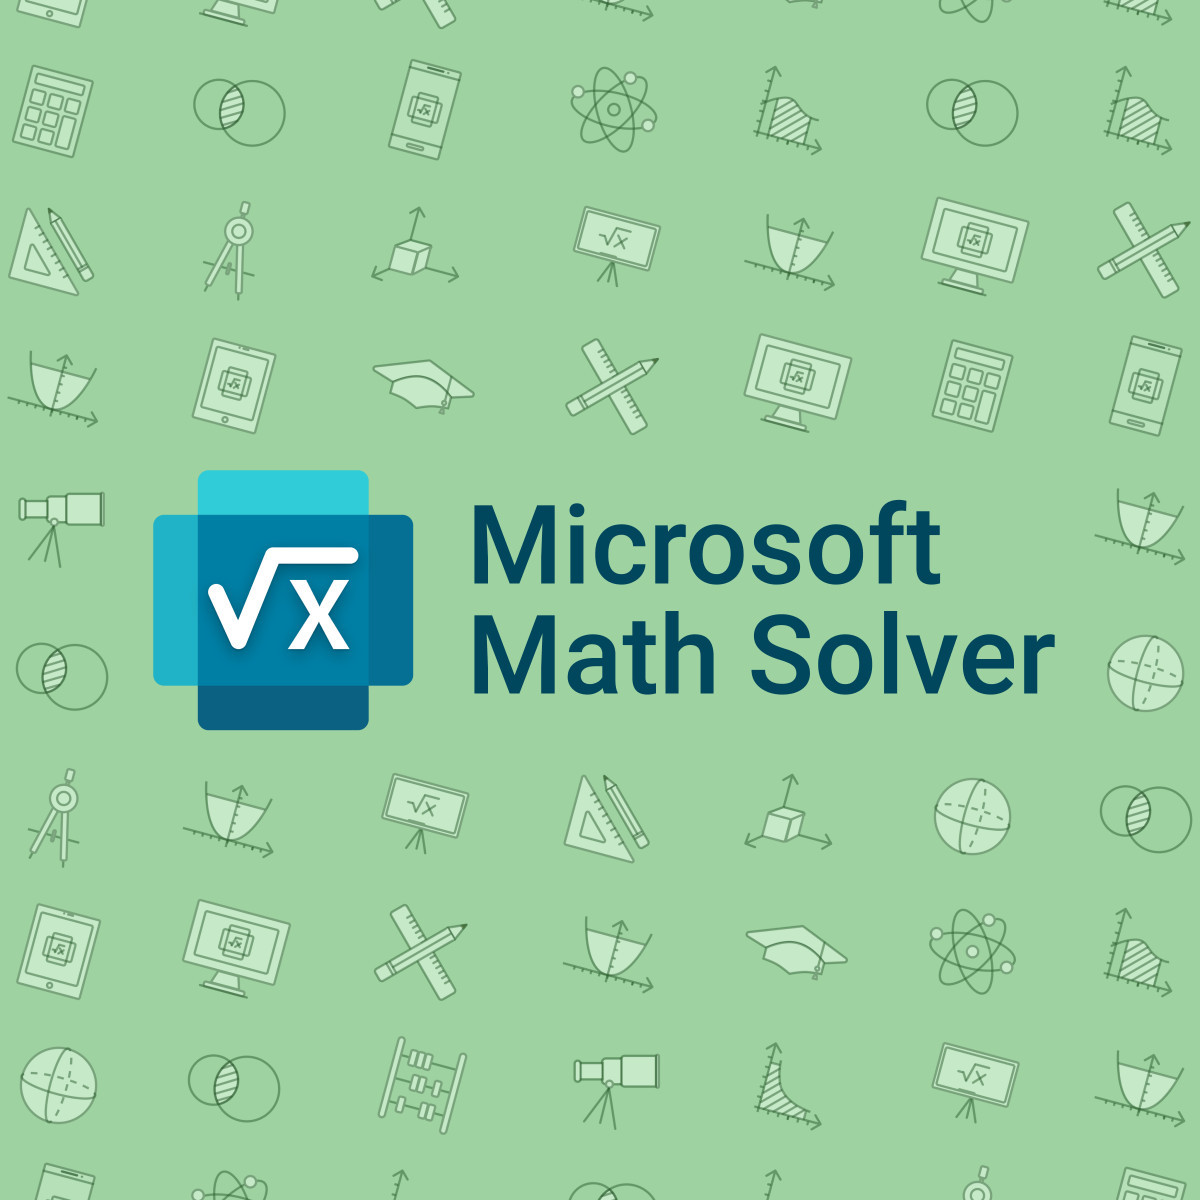 solve-x-2-6x-27-microsoft-math-solver